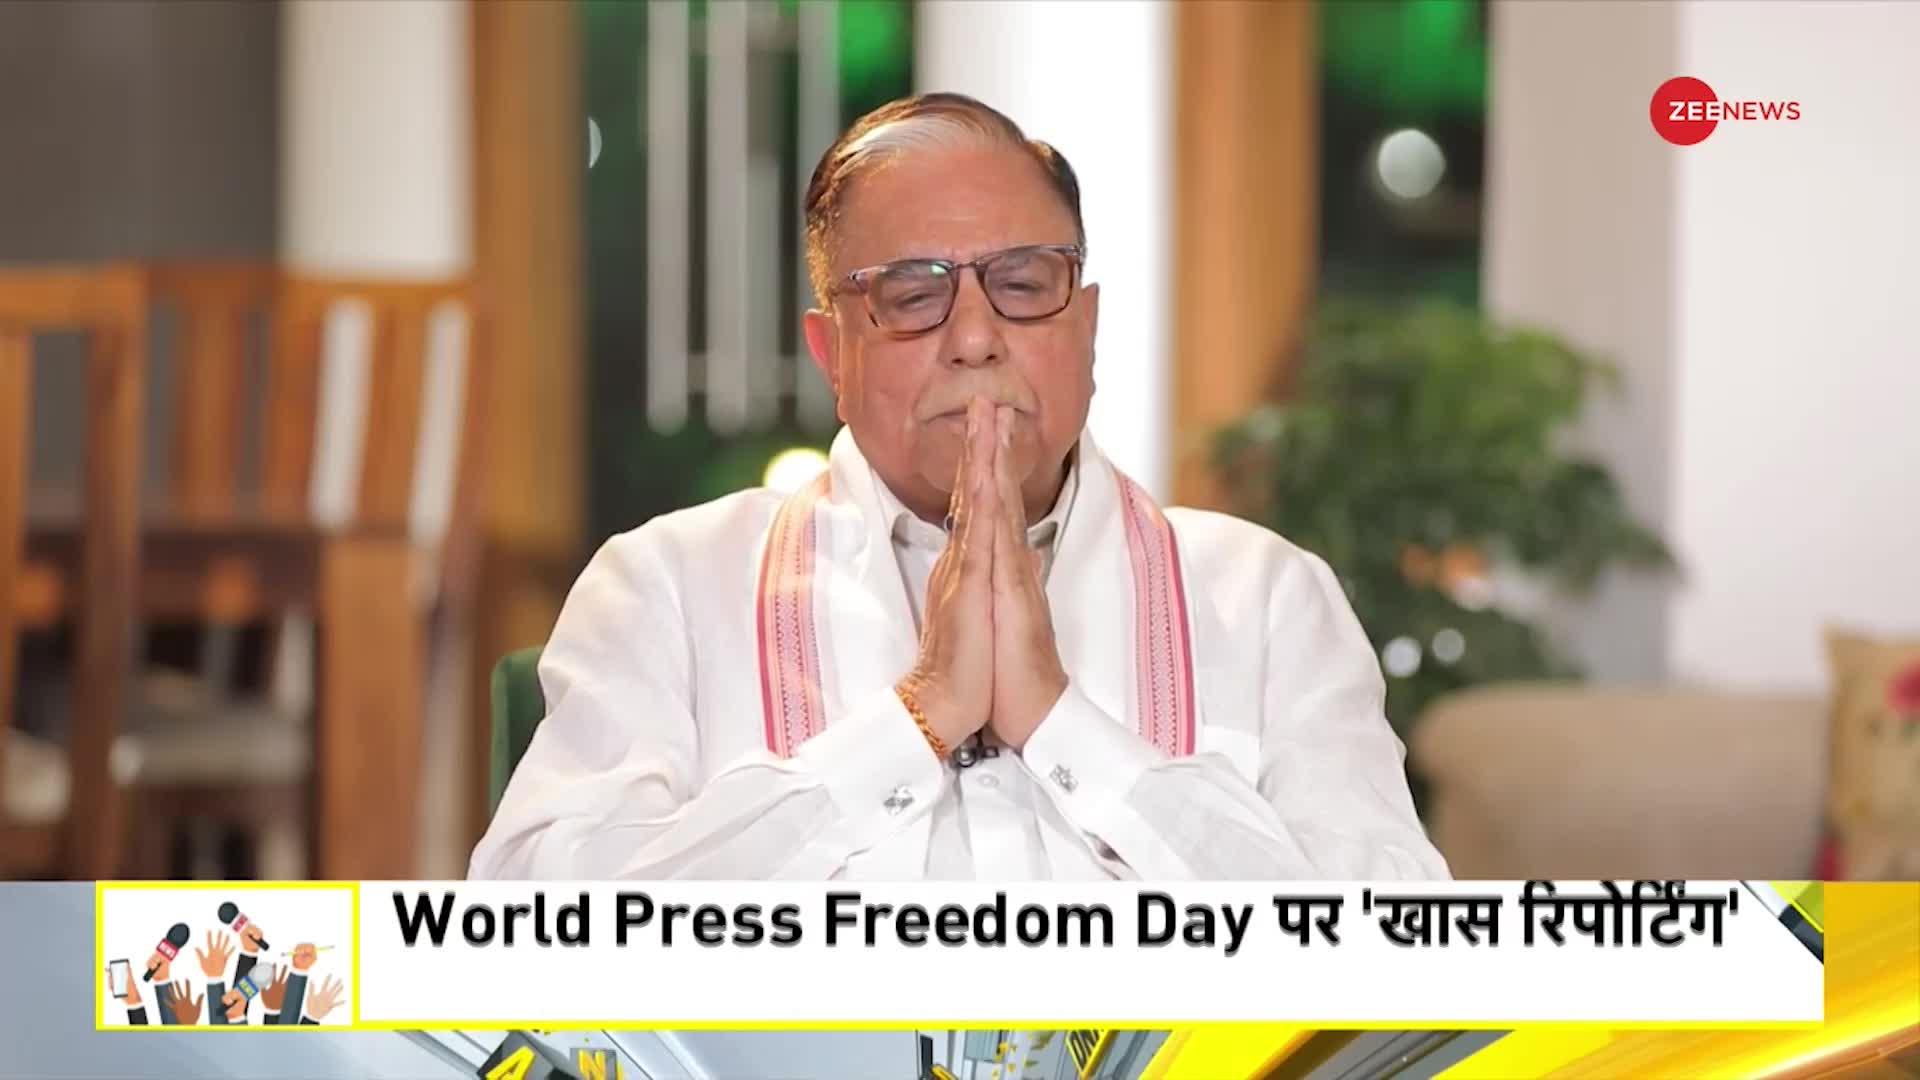 Subhash Chandra Address LIVE: विश्व प्रेस स्वतंत्रता दिवस पर डॉ सुभाष चंद्रा का सन्देश